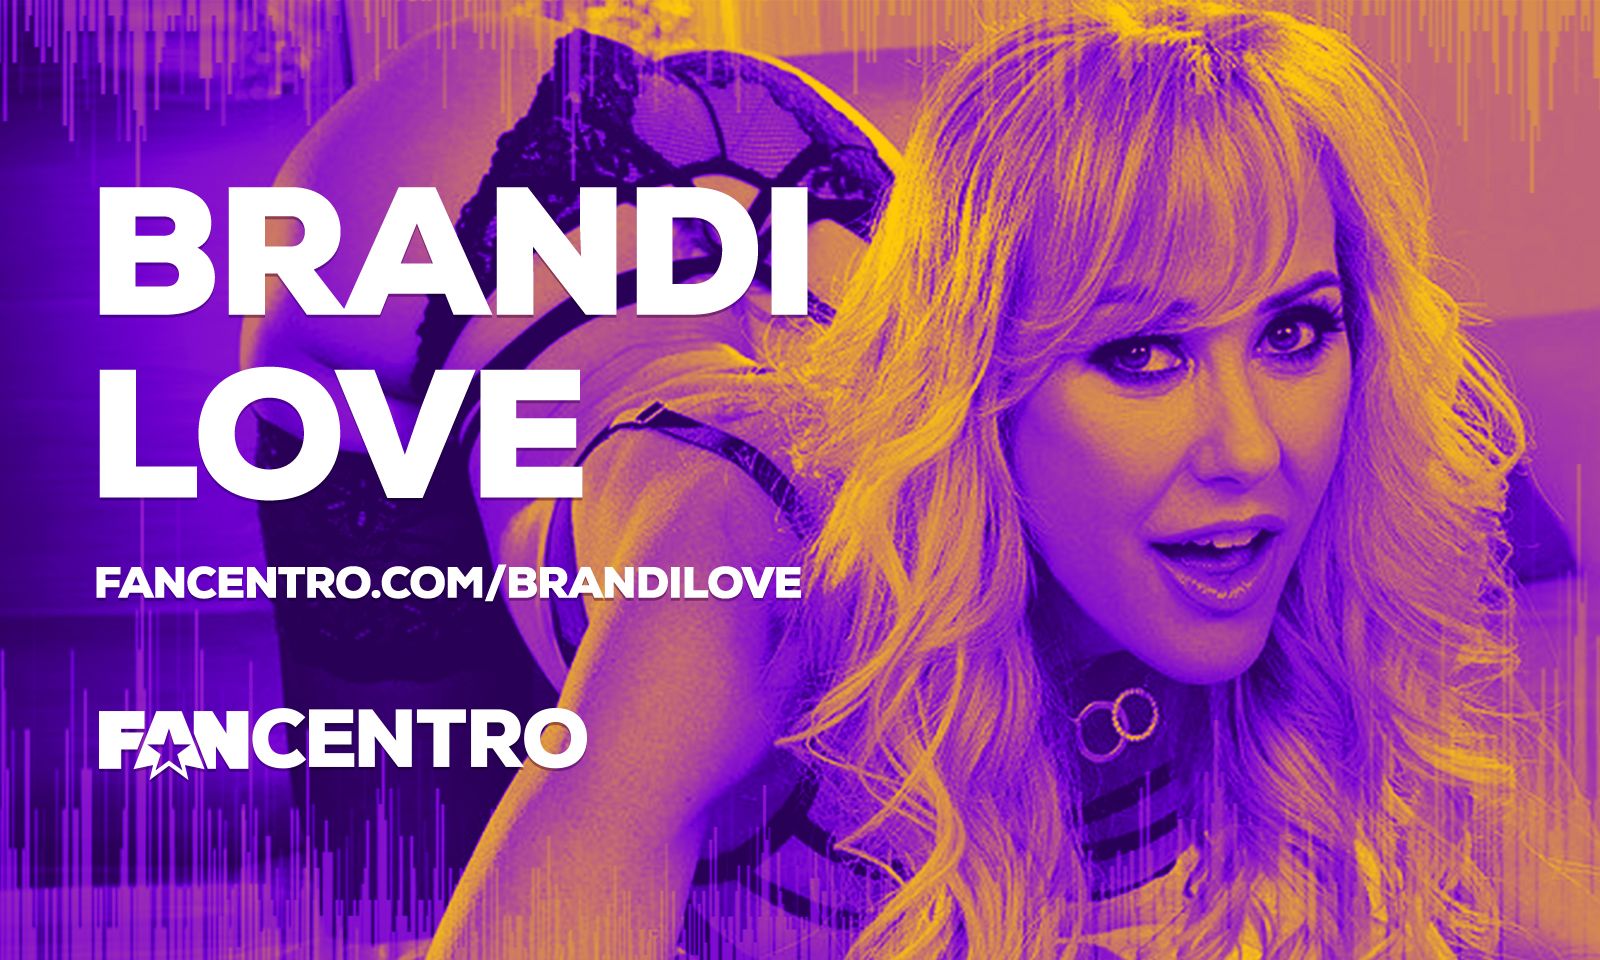 Brandi Love Gets Her Snapchat on Courtesy of Fancentro